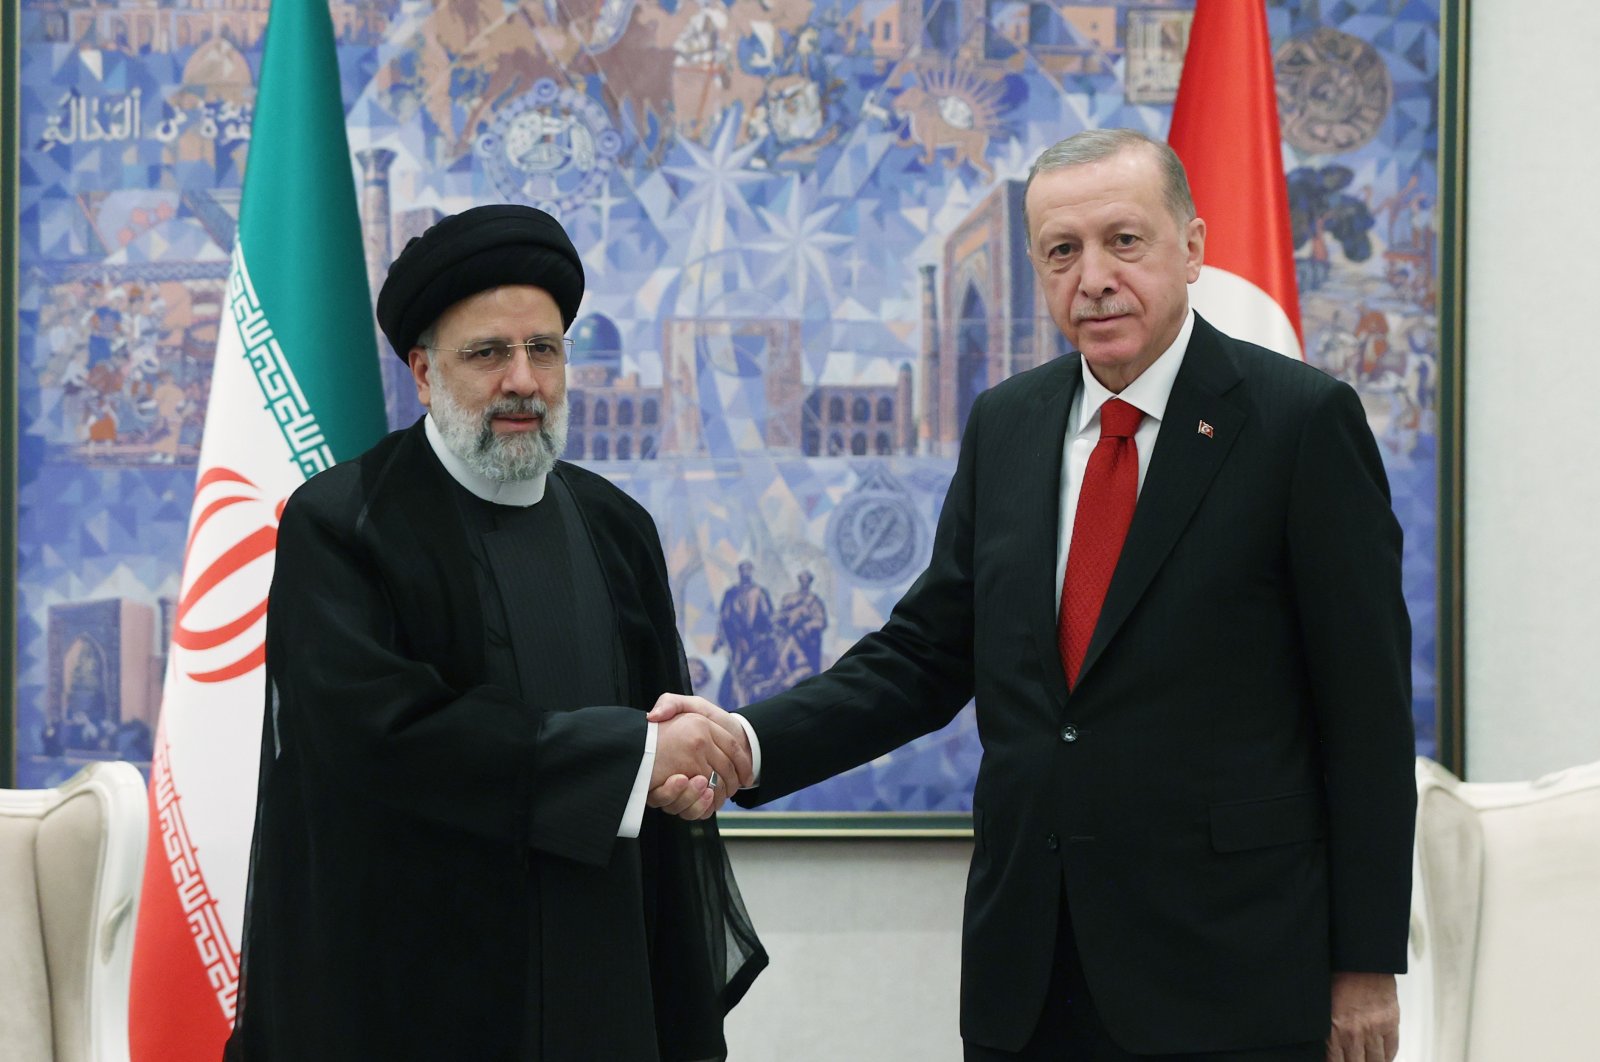 President Recep Tayyip Erdoğan shakes hands with Iranian President Ebrahim Raisi during a meeting in Samarkand, Uzbekistan, Sept. 17, 2022. (İHA Photo)